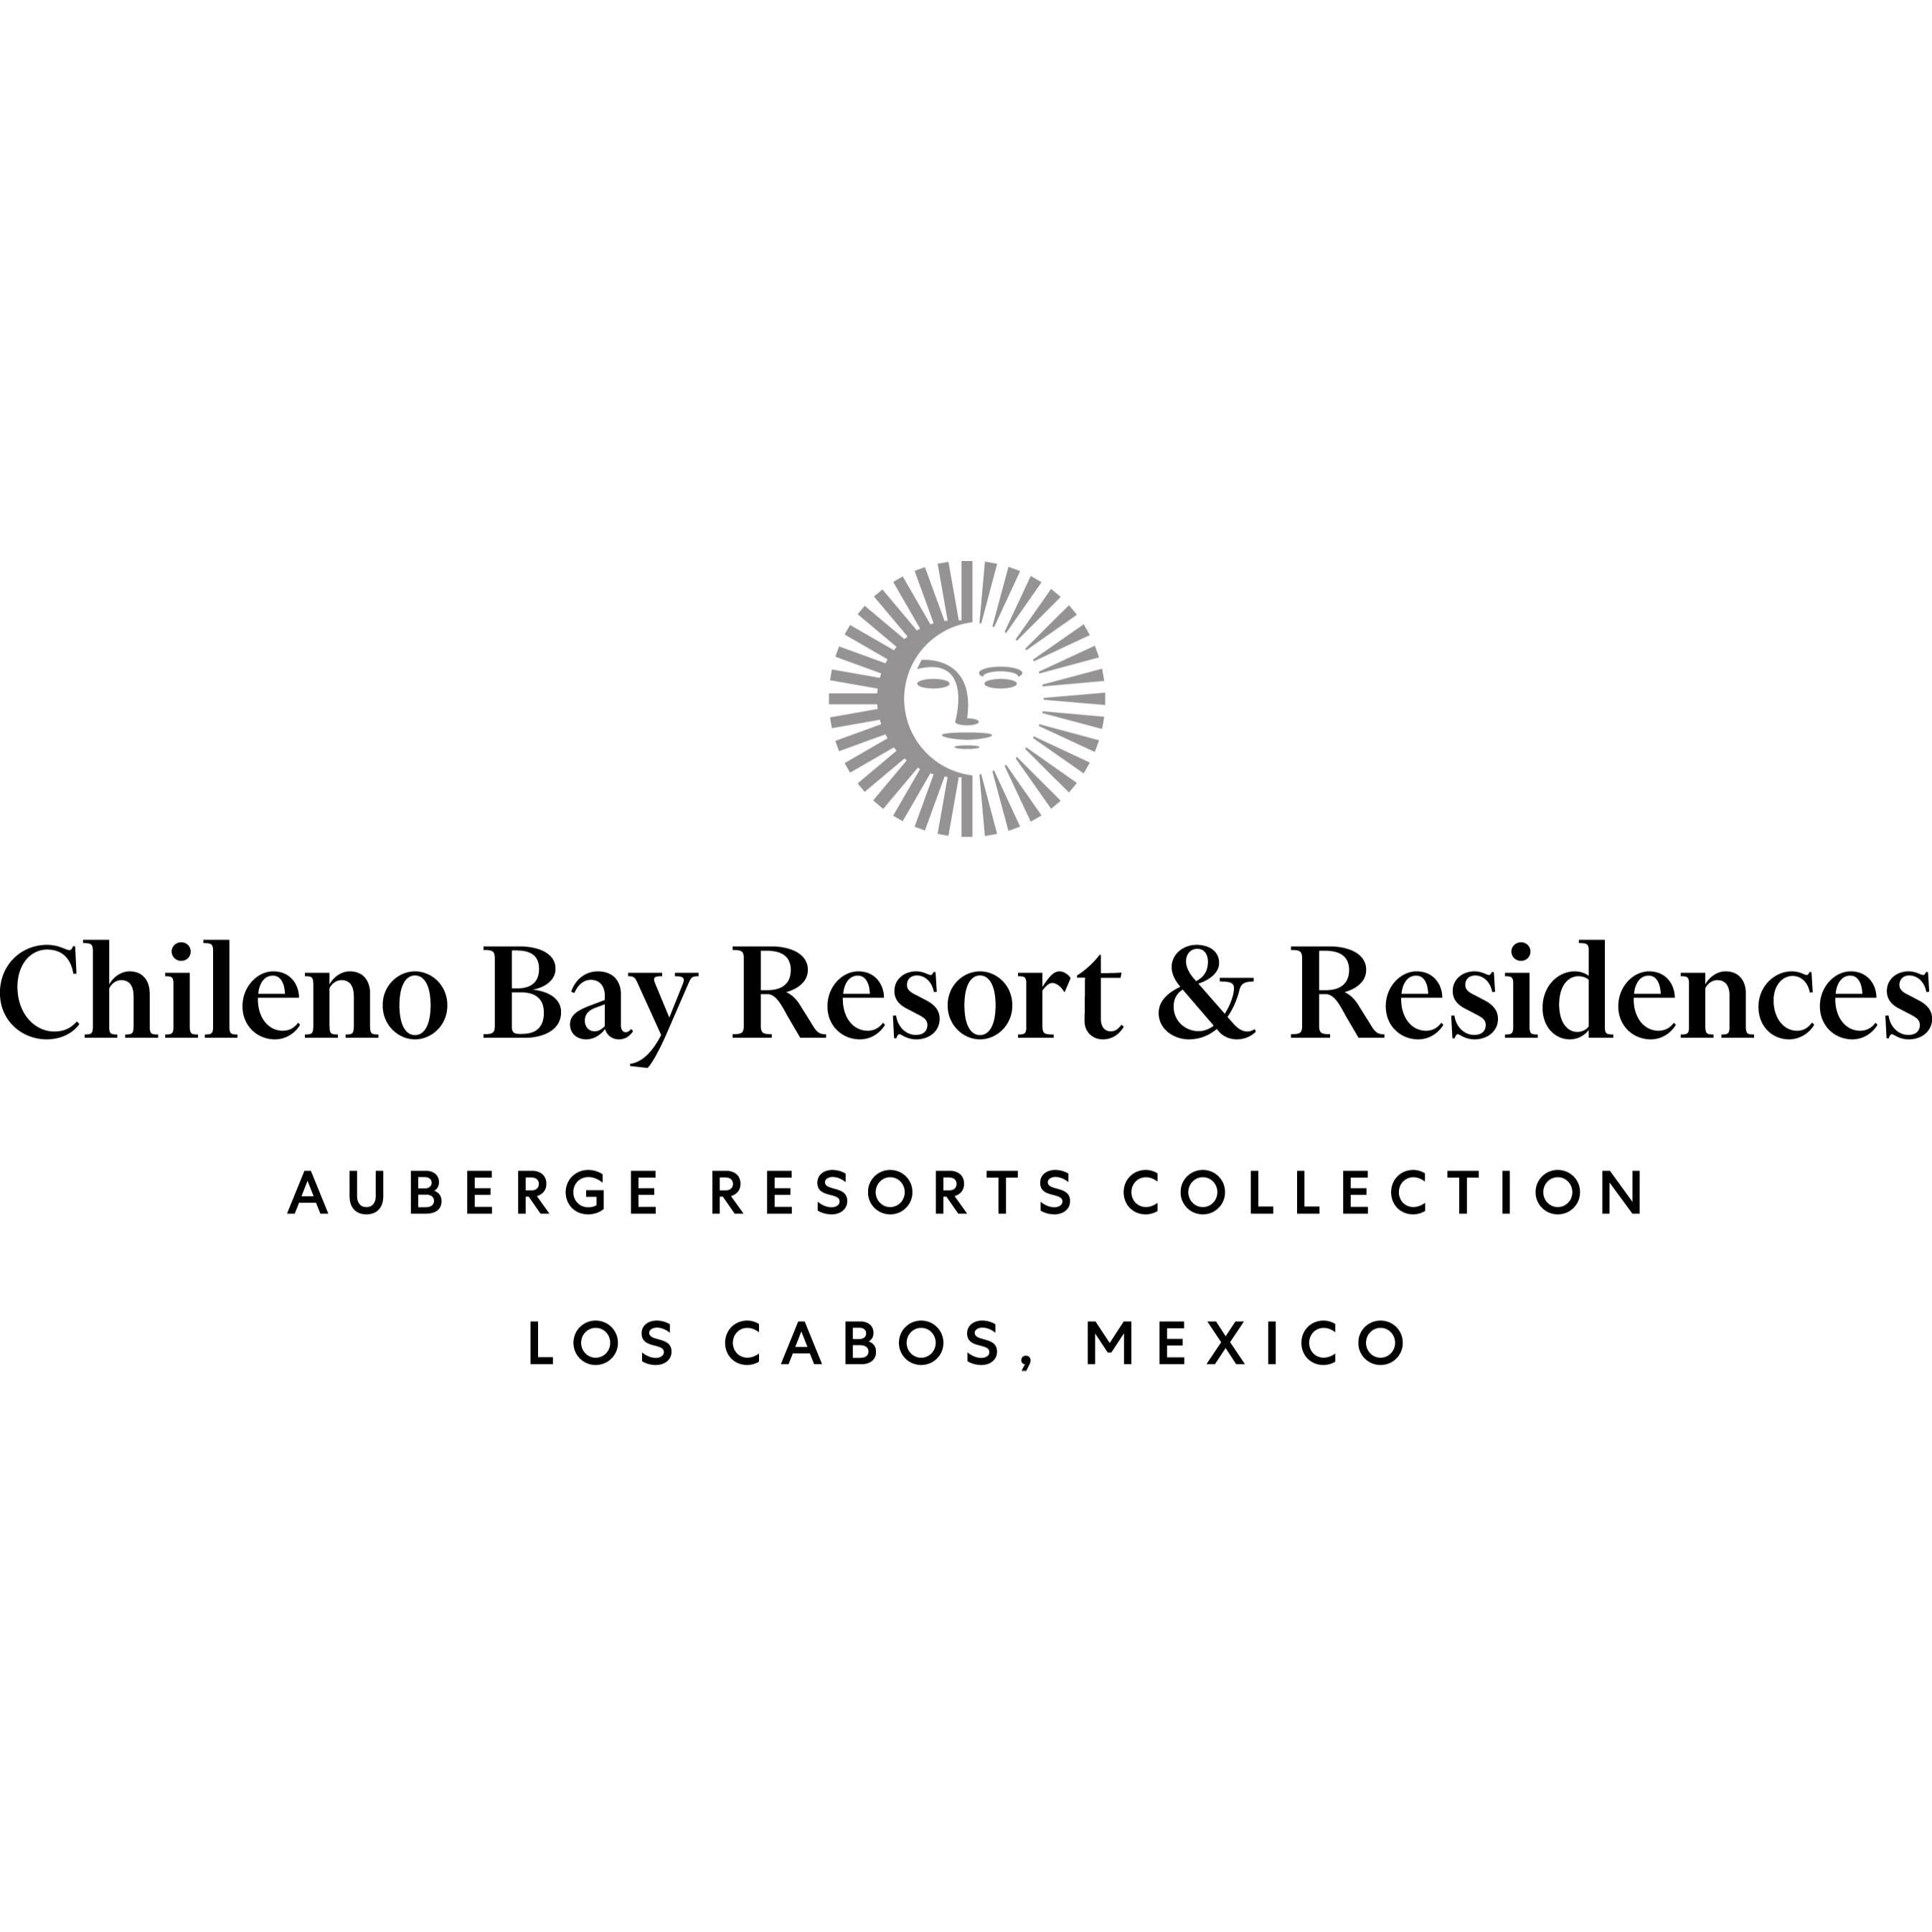 Chileno Bay Resort & Residences, Auberge Resorts Collection Logo